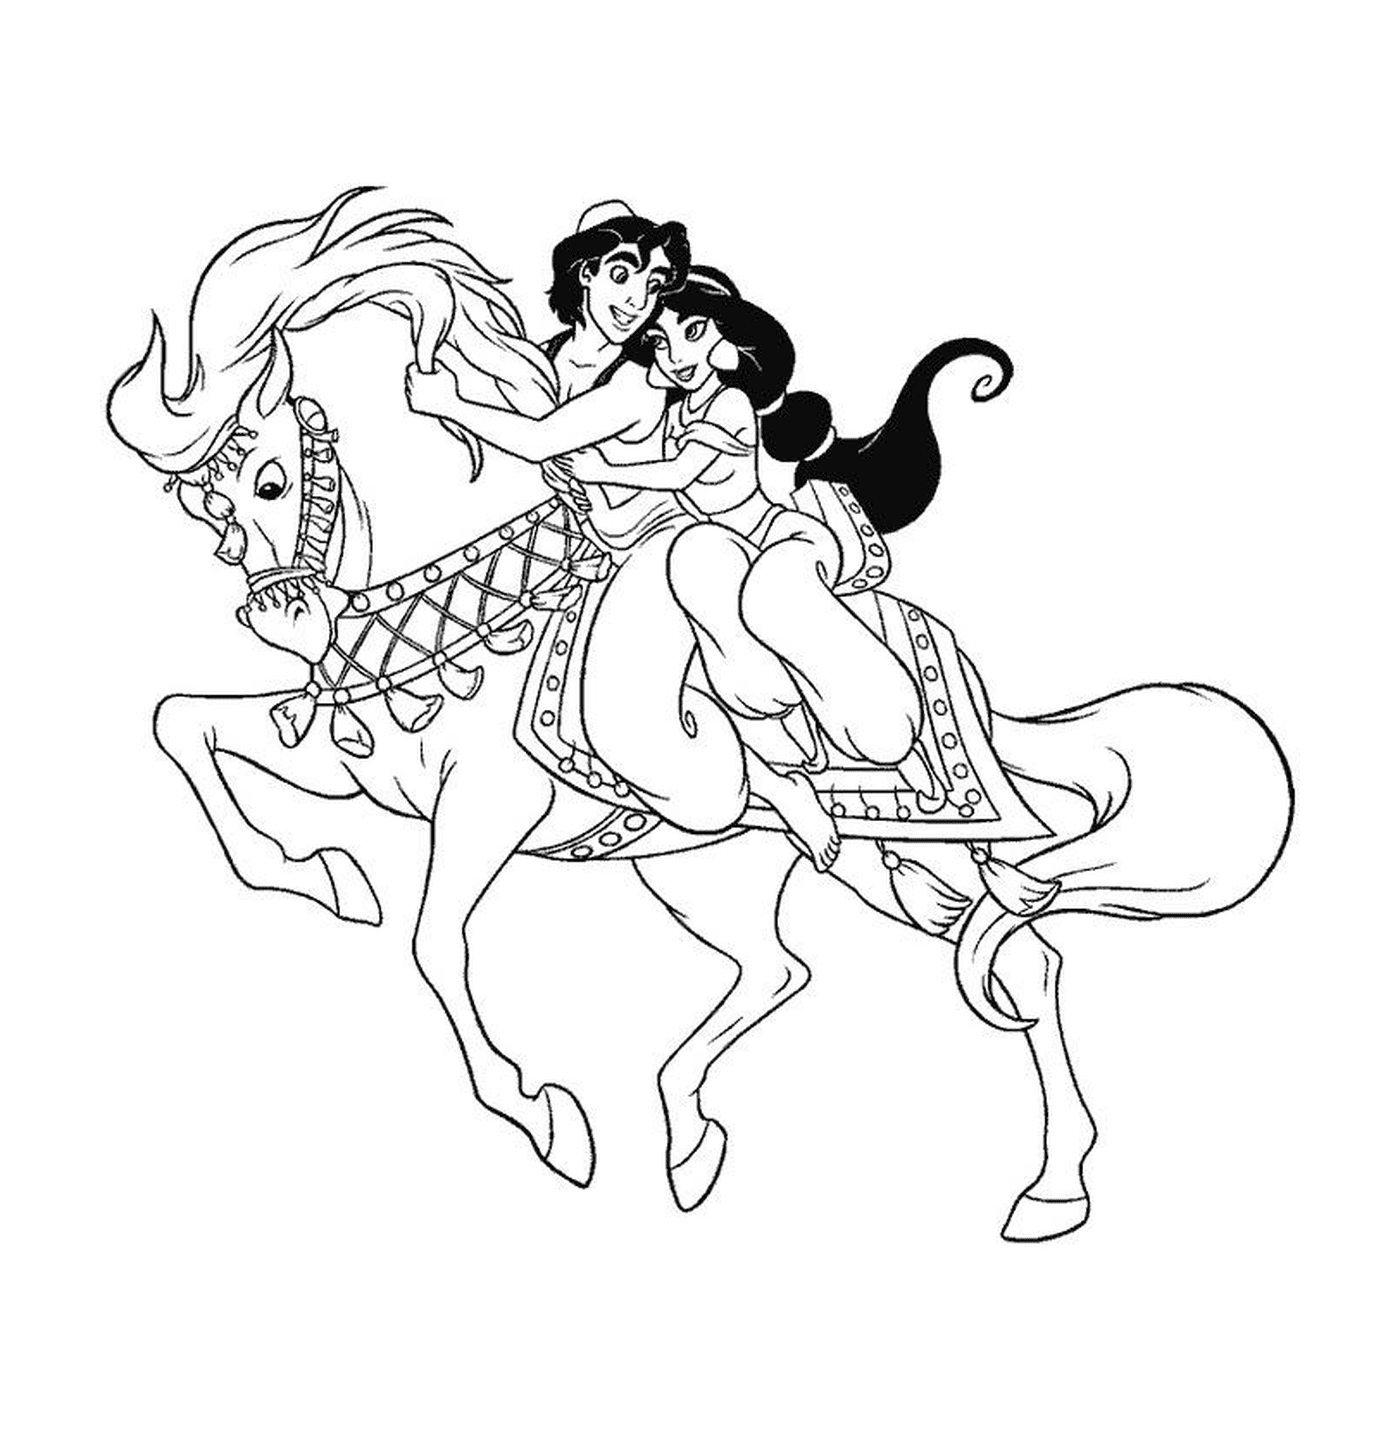  Aladdin and Jasmine on a horse 